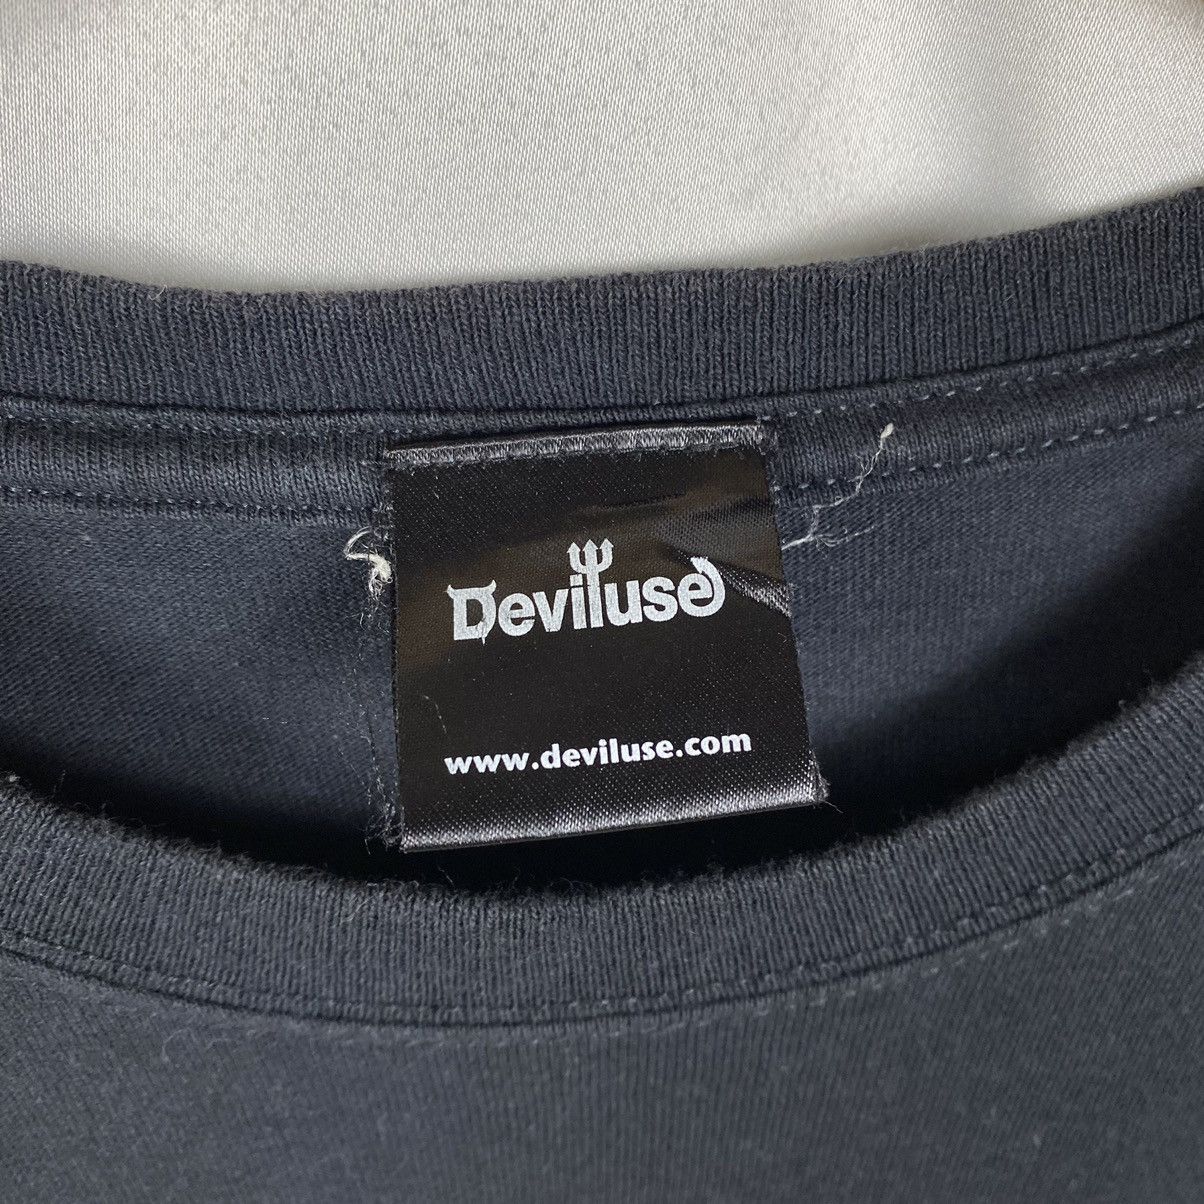 Vintage Vintage Deviluse Skateboard T-shirt Size US S / EU 44-46 / 1 - 4 Thumbnail